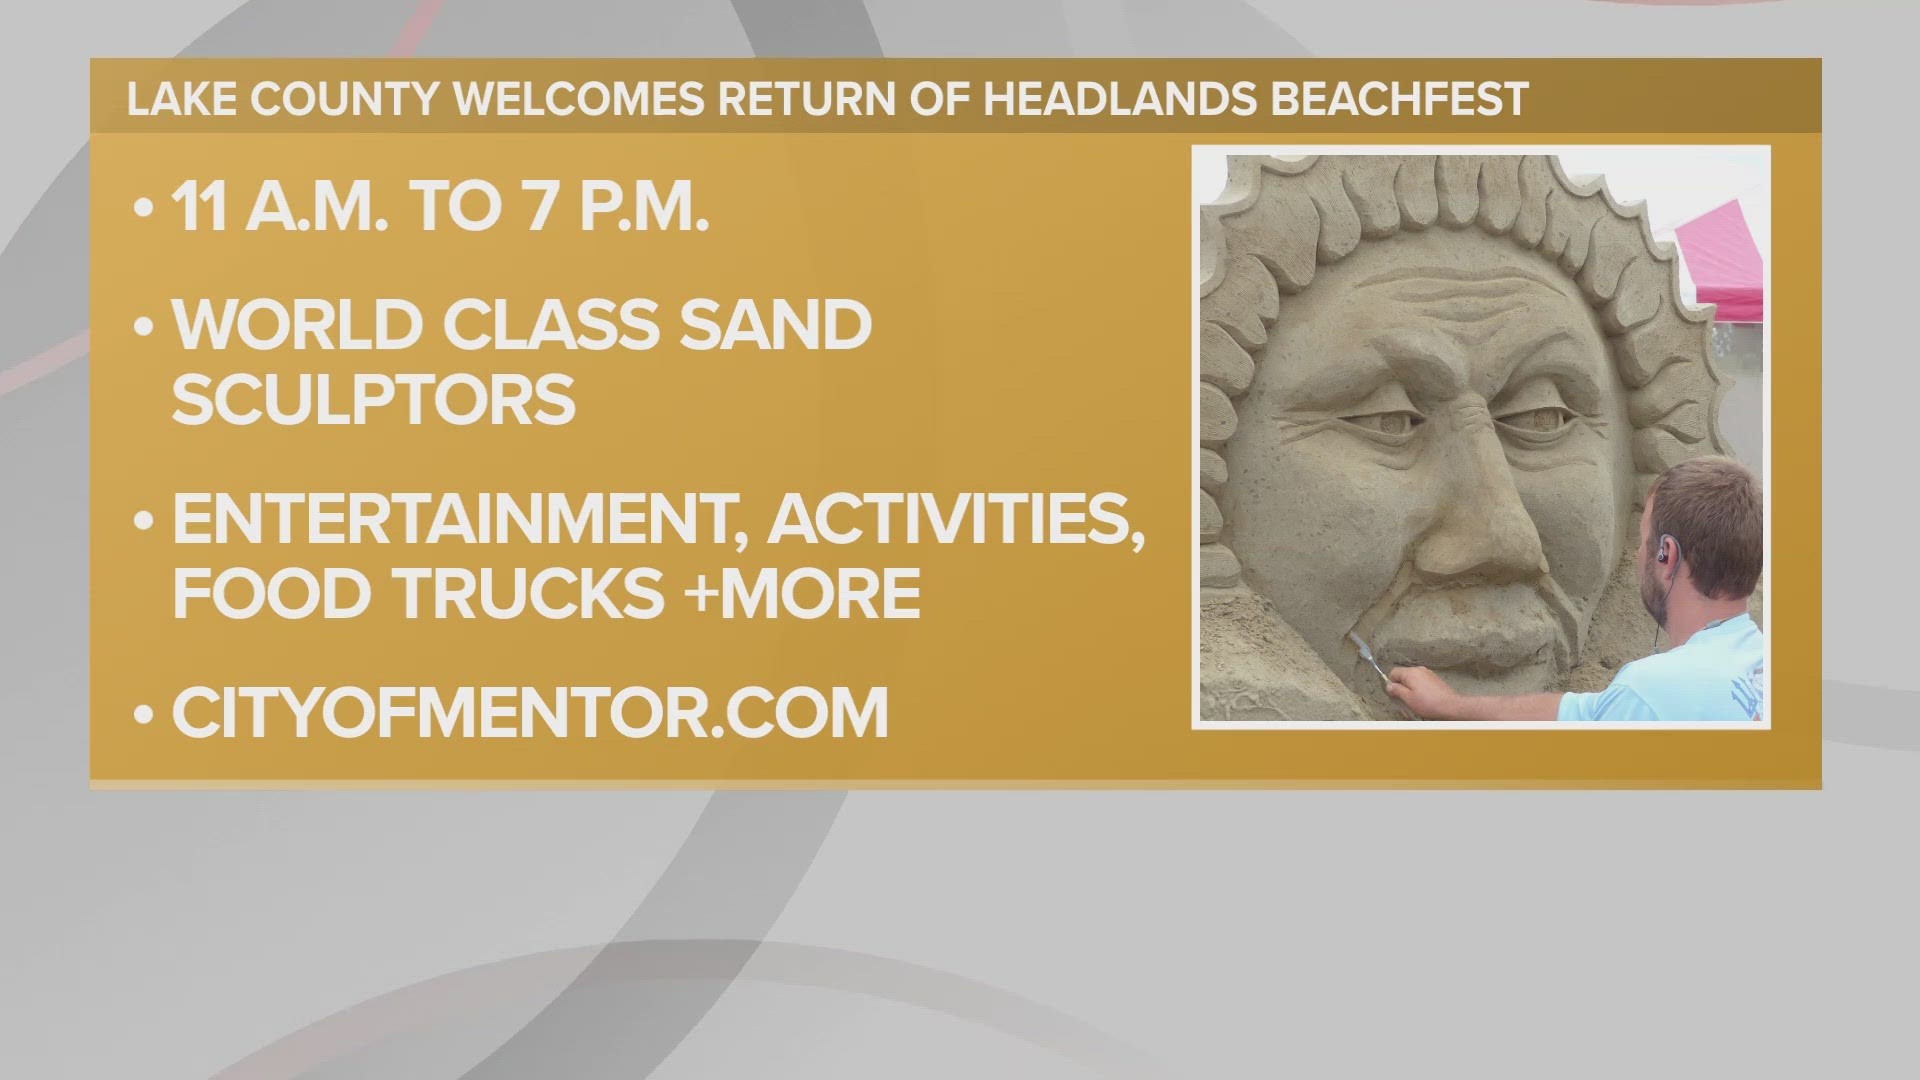 When is Headlands BeachFest in Mentor?